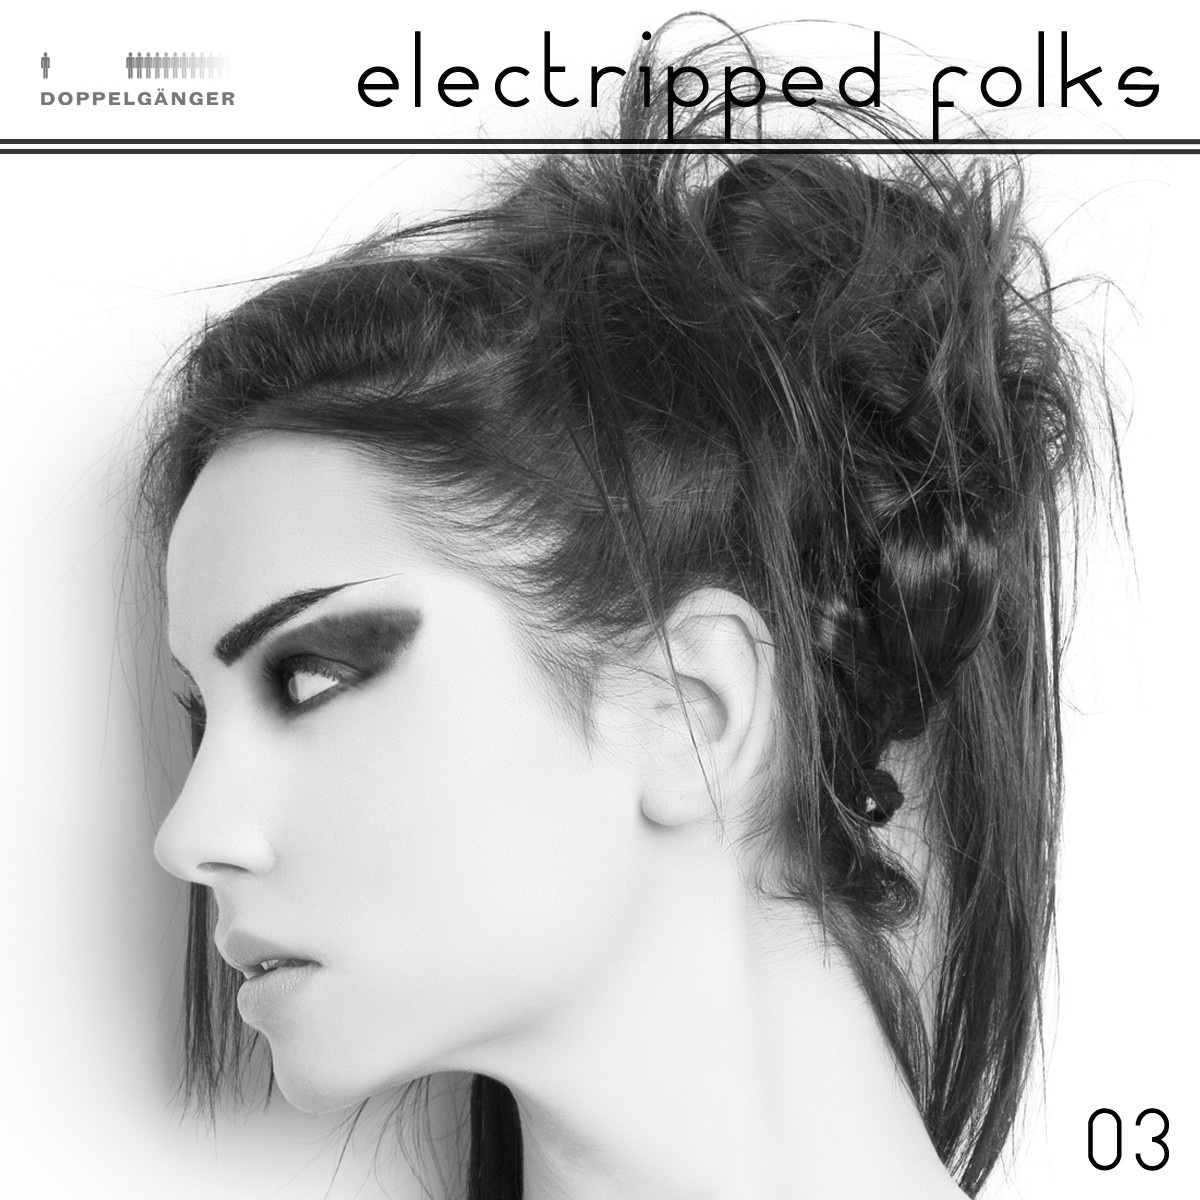 Electripped Folks, 03